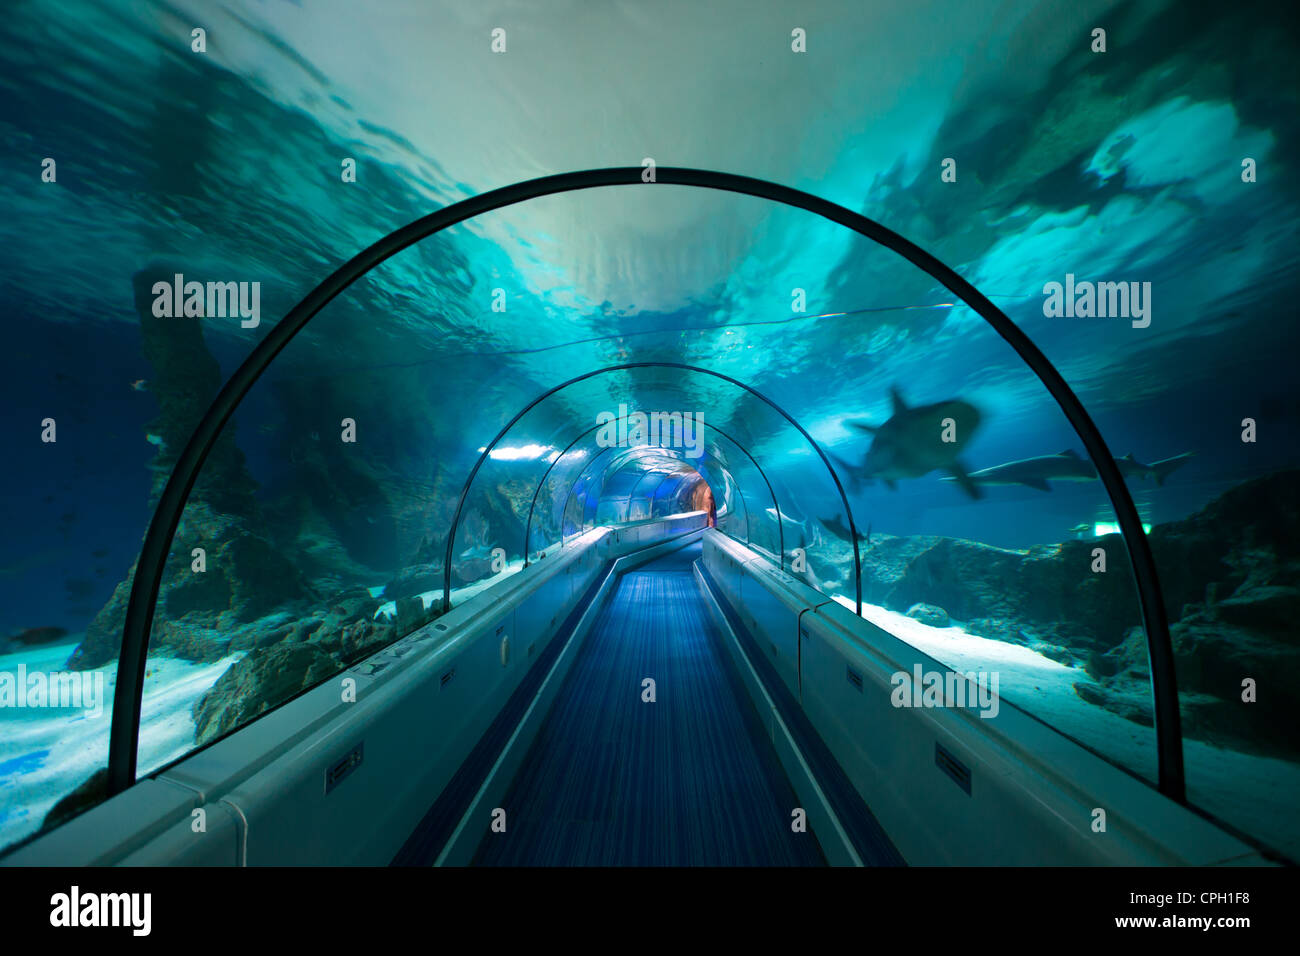 Long Glass Tunnel Built Under Artificially Created Aquarium - All Sea & Ocean Life Visible Stock Photo